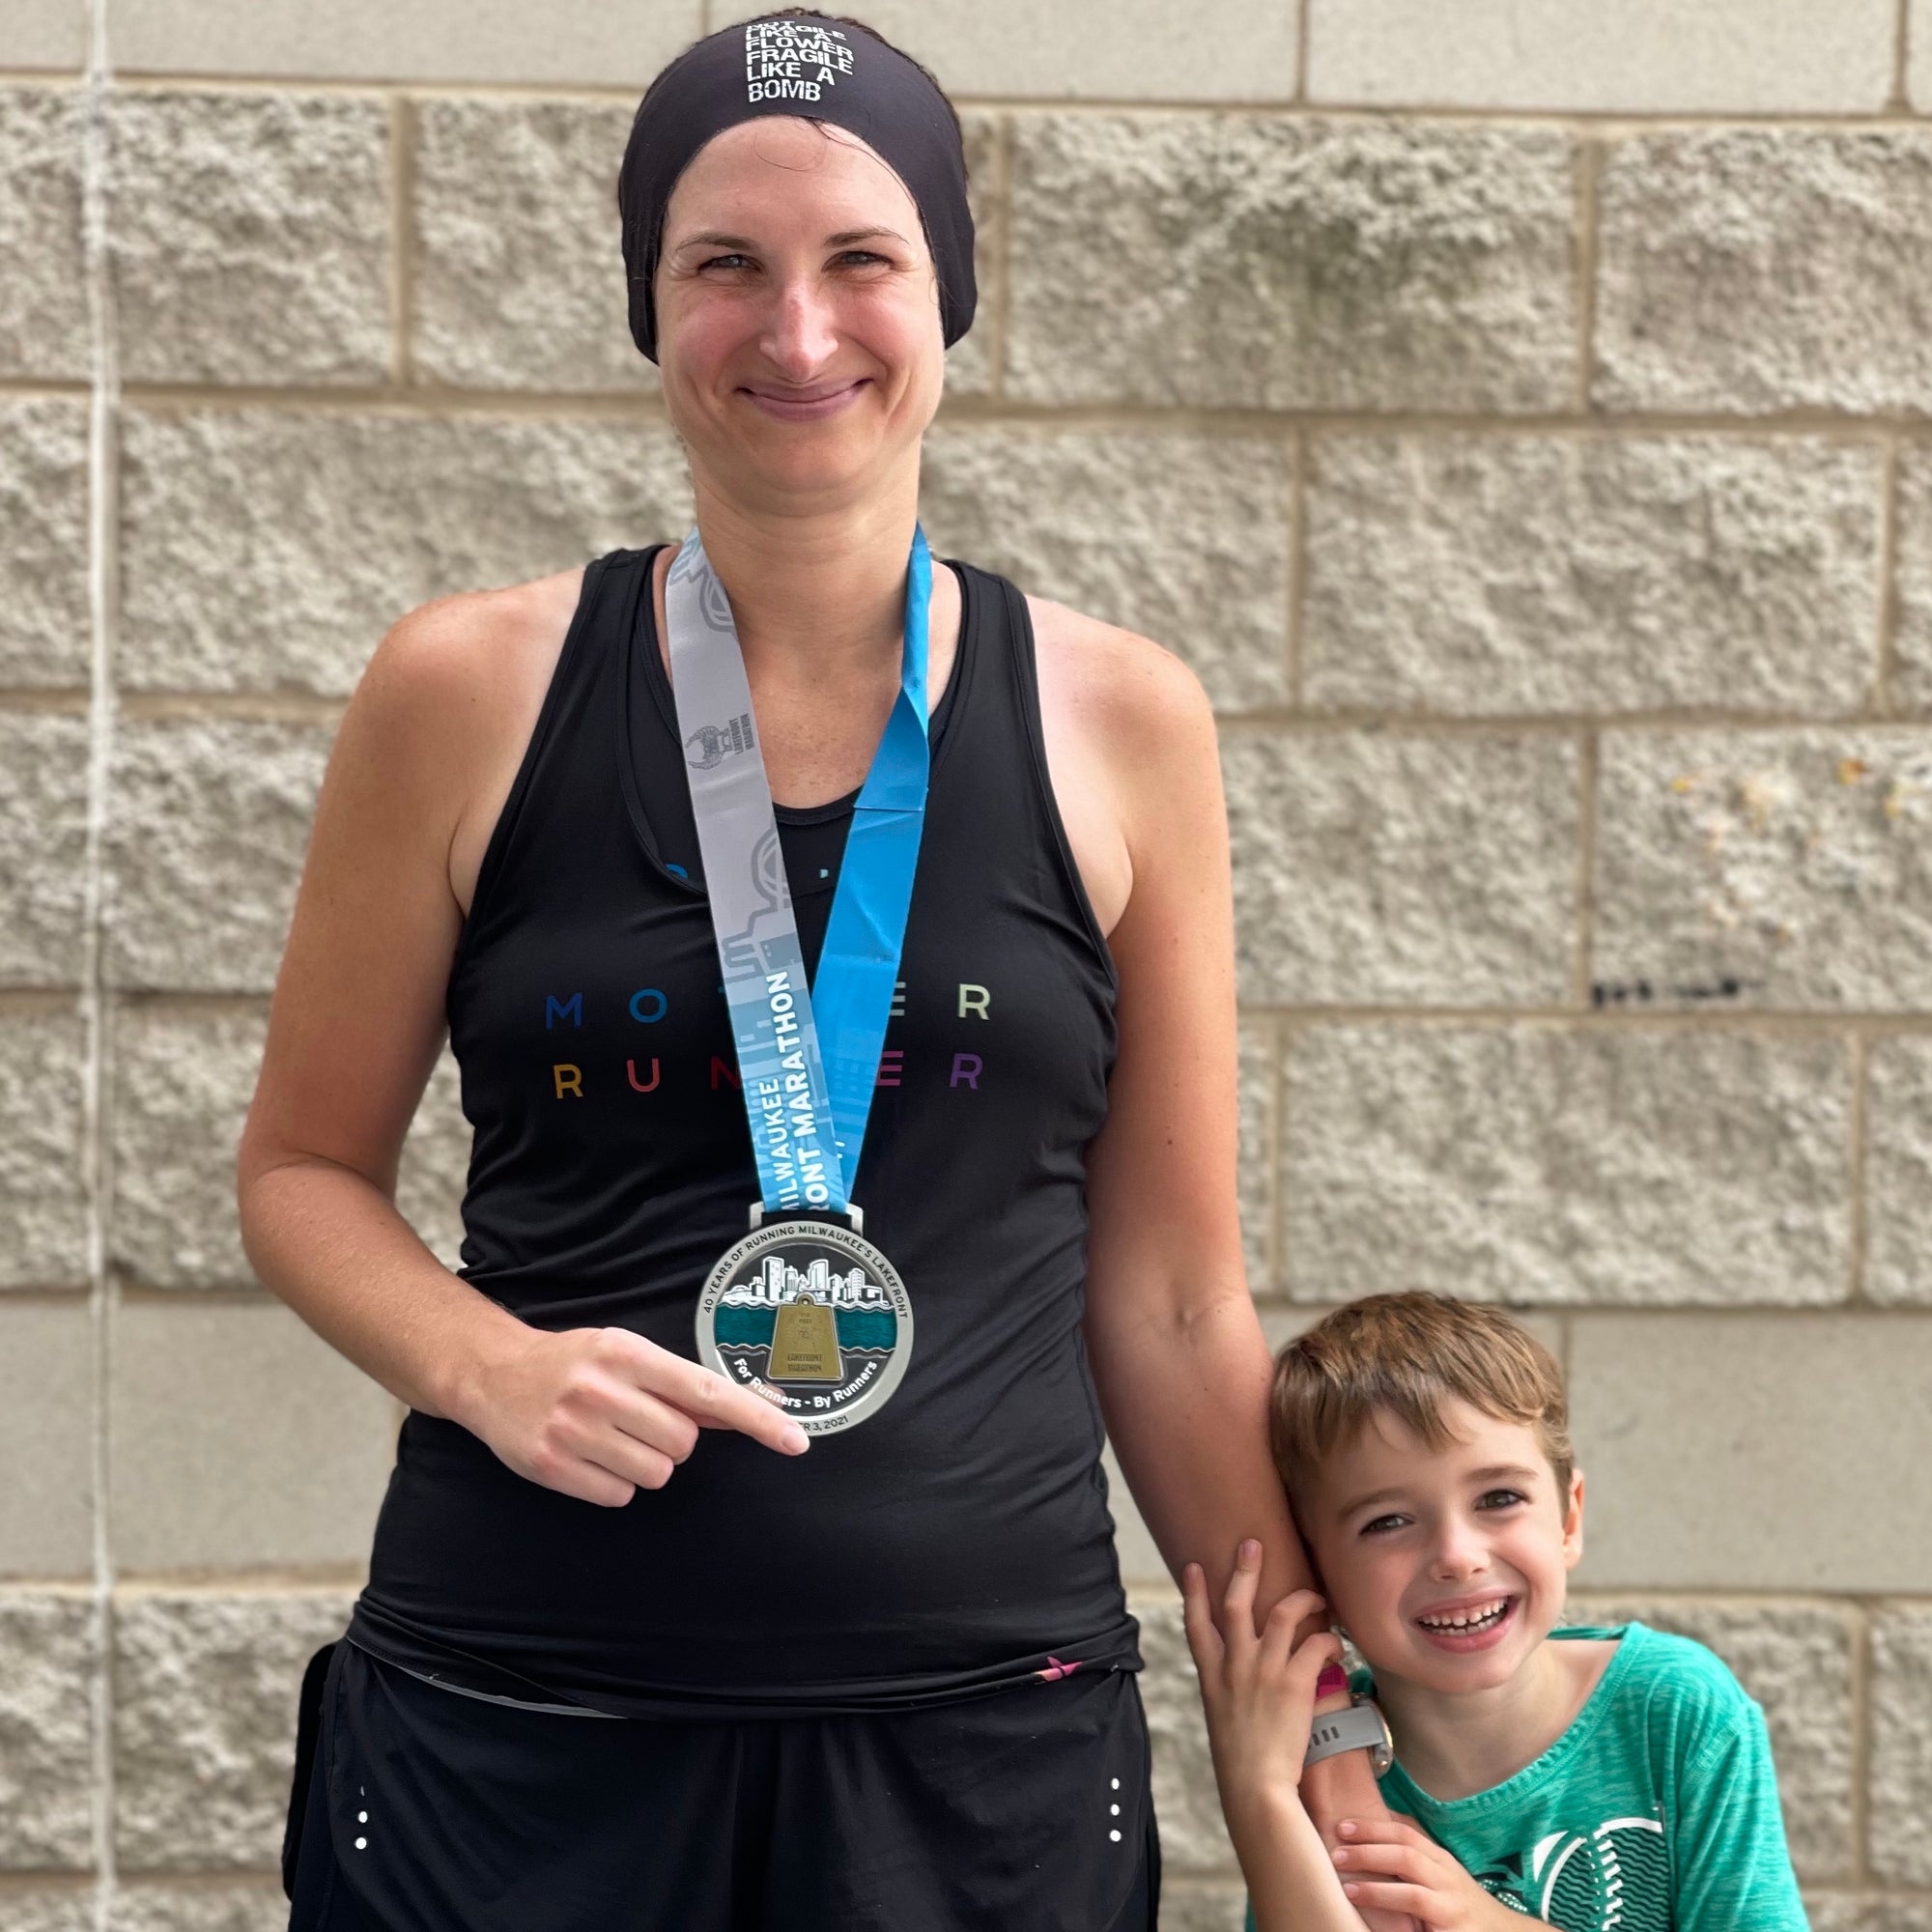 RADJournals: Kristin Majinski's journey to overcome everything life threw her way to get to the finish line of her first marathon